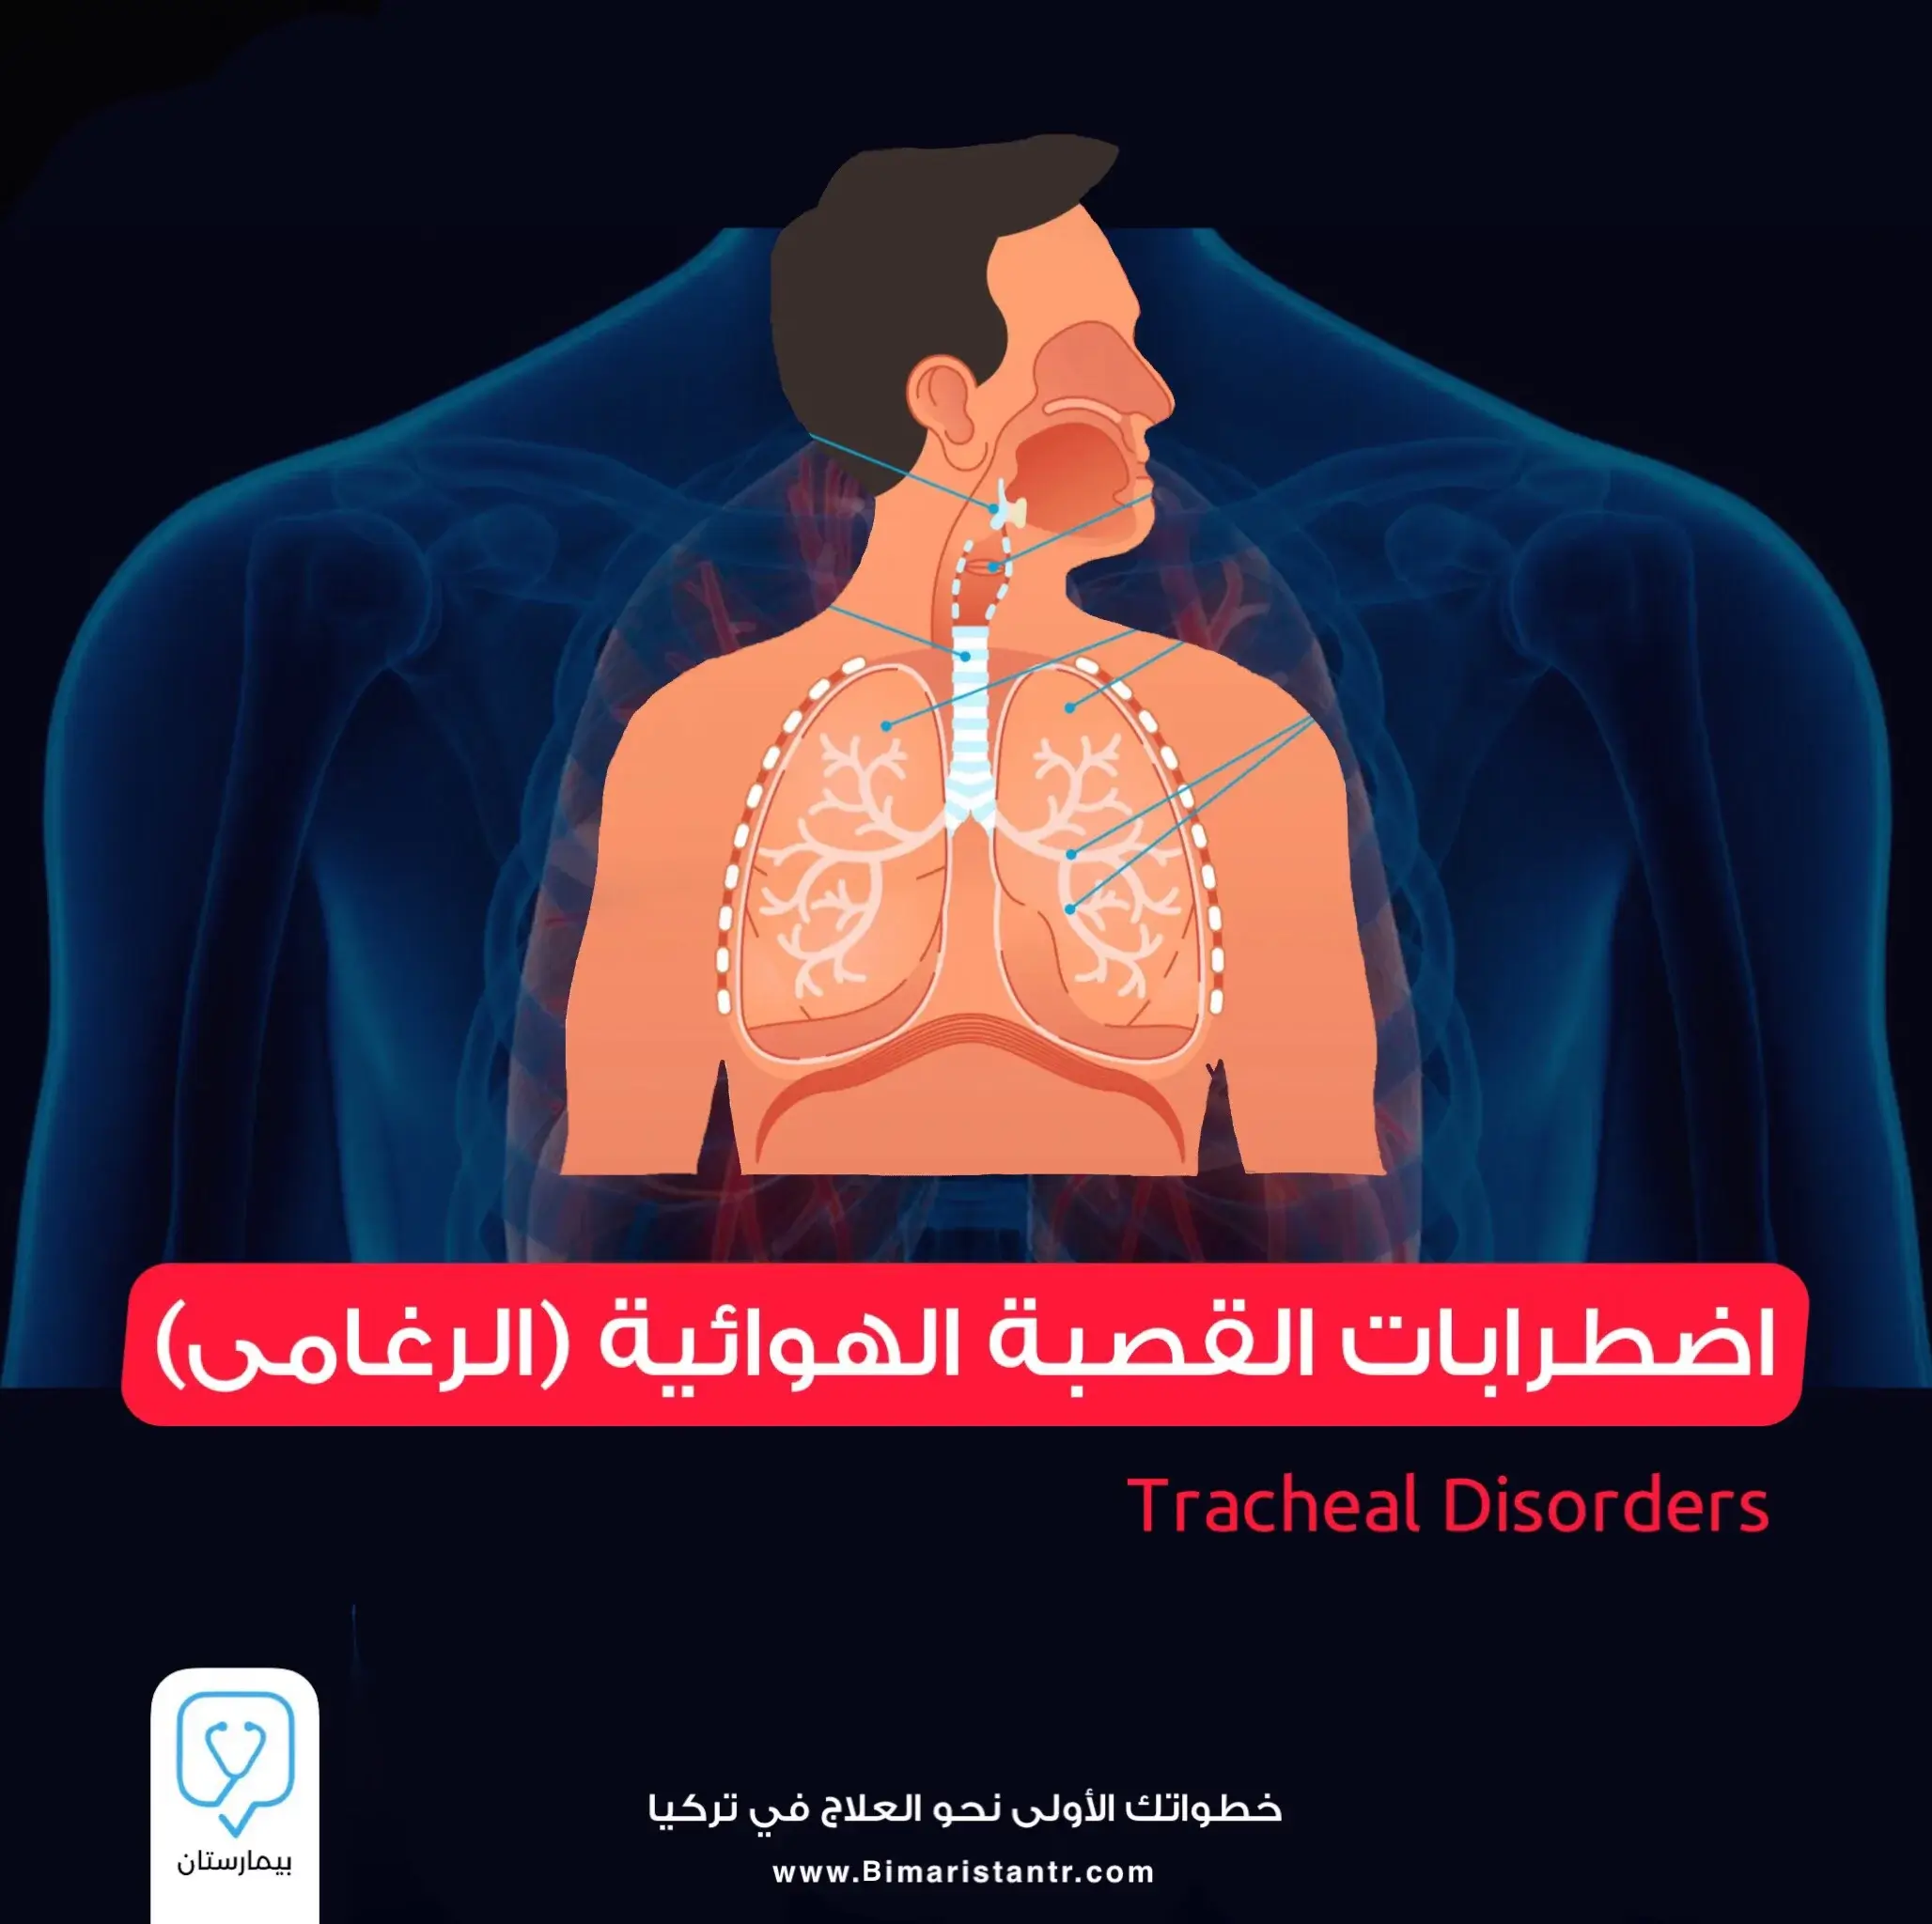 Tracheal (tracheal) disorders